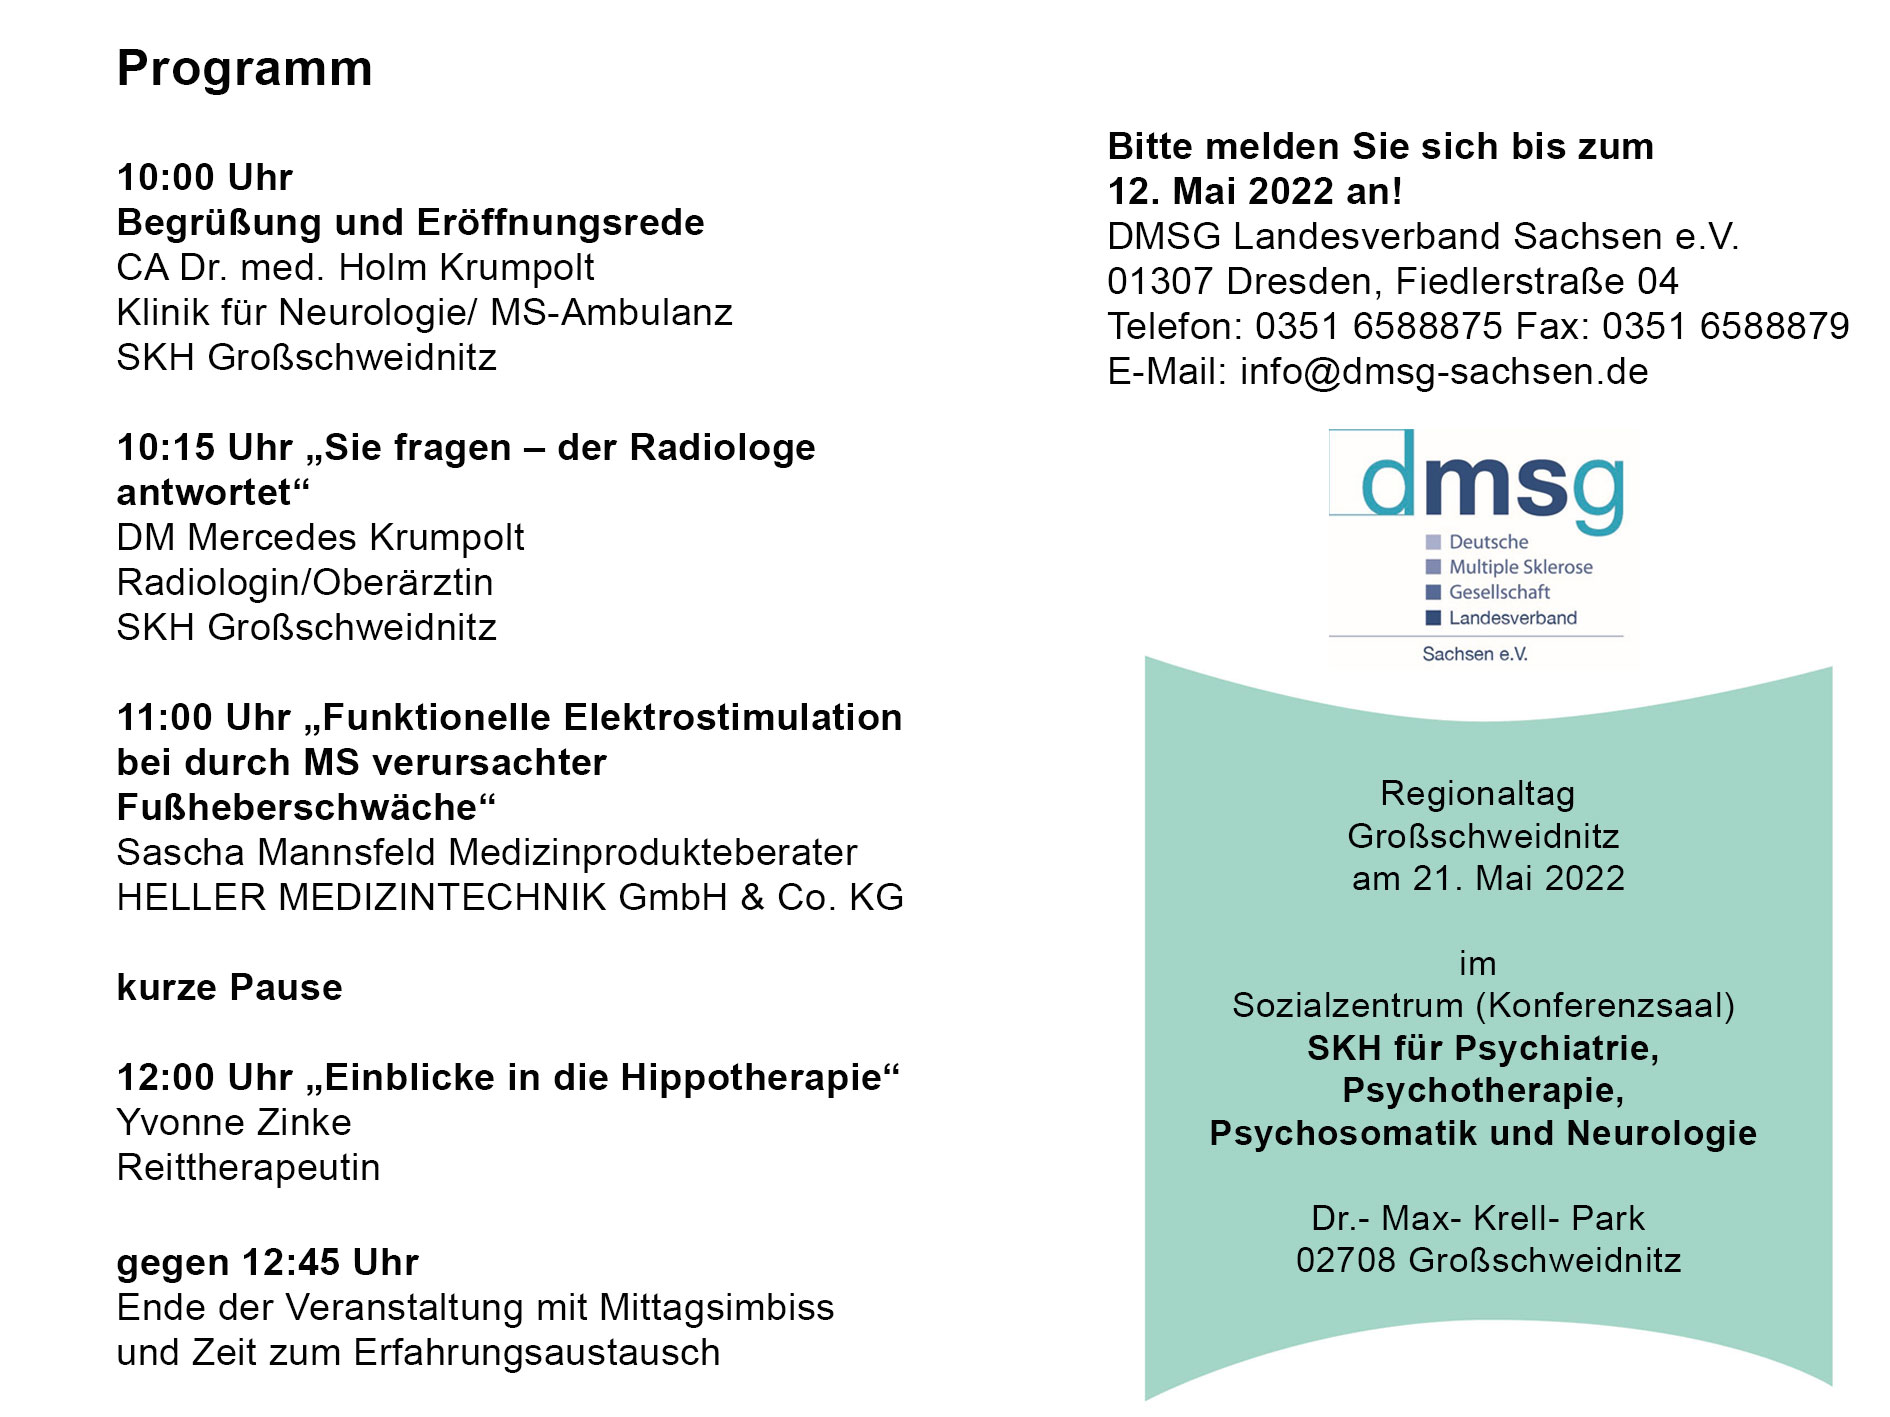 DMSG Landesverband Sachsen e. V.: Regionaltag in Großschweidnitz am 21. Mai 2022